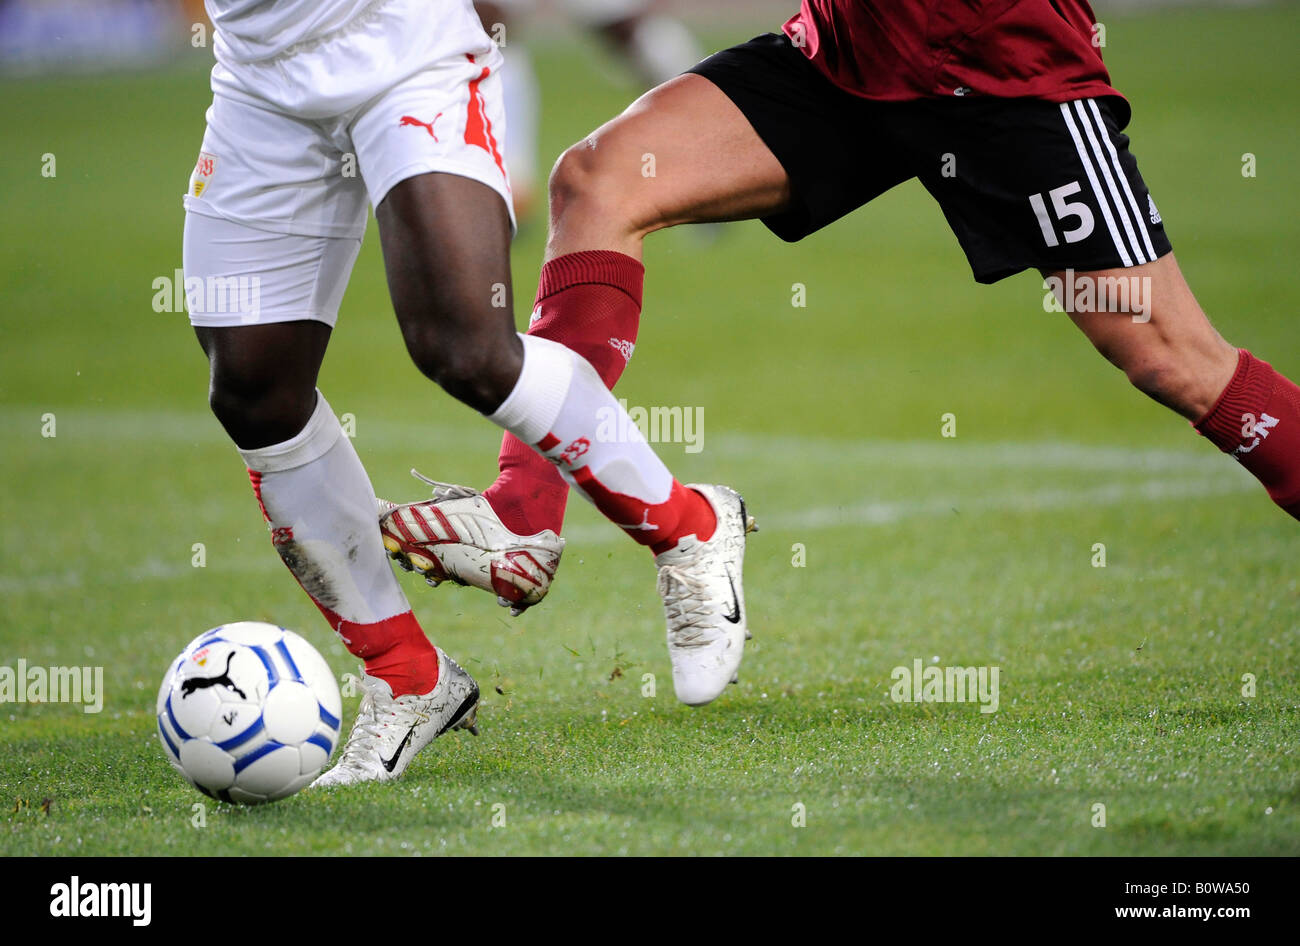 Arthur Boka, VfB Stuttgart footballer on the left tackling Jan Kristiansen, 1. FC Nuremberg player on the right, tackle Stock Photo